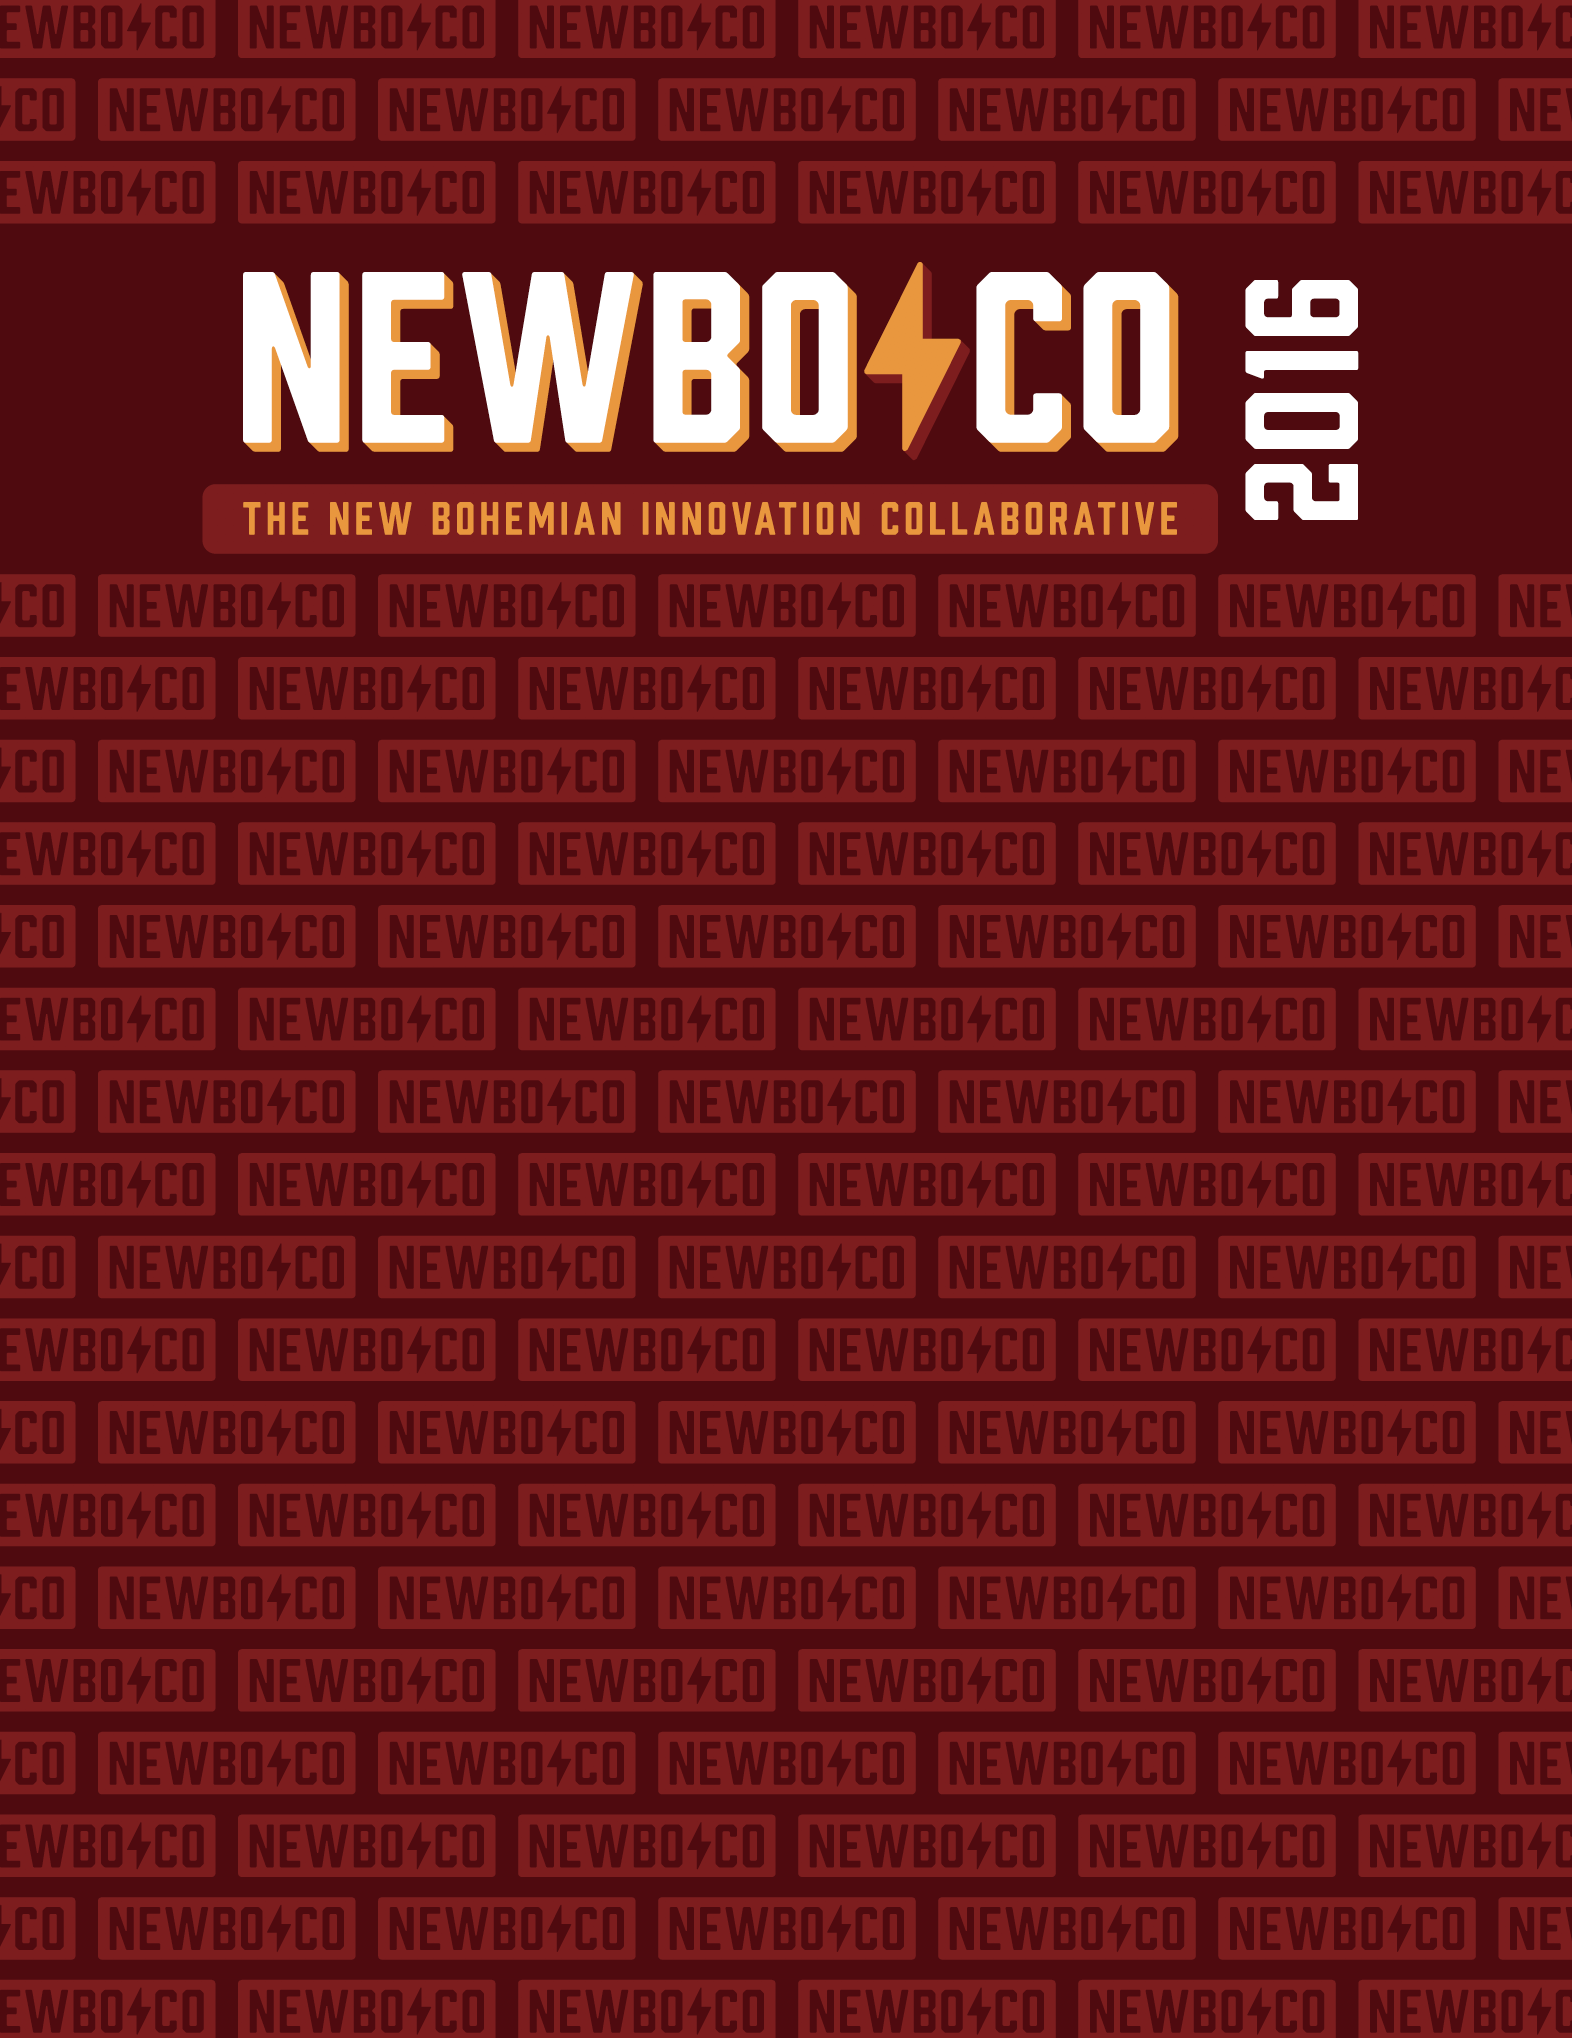 2016 NewBoCo Annual Report